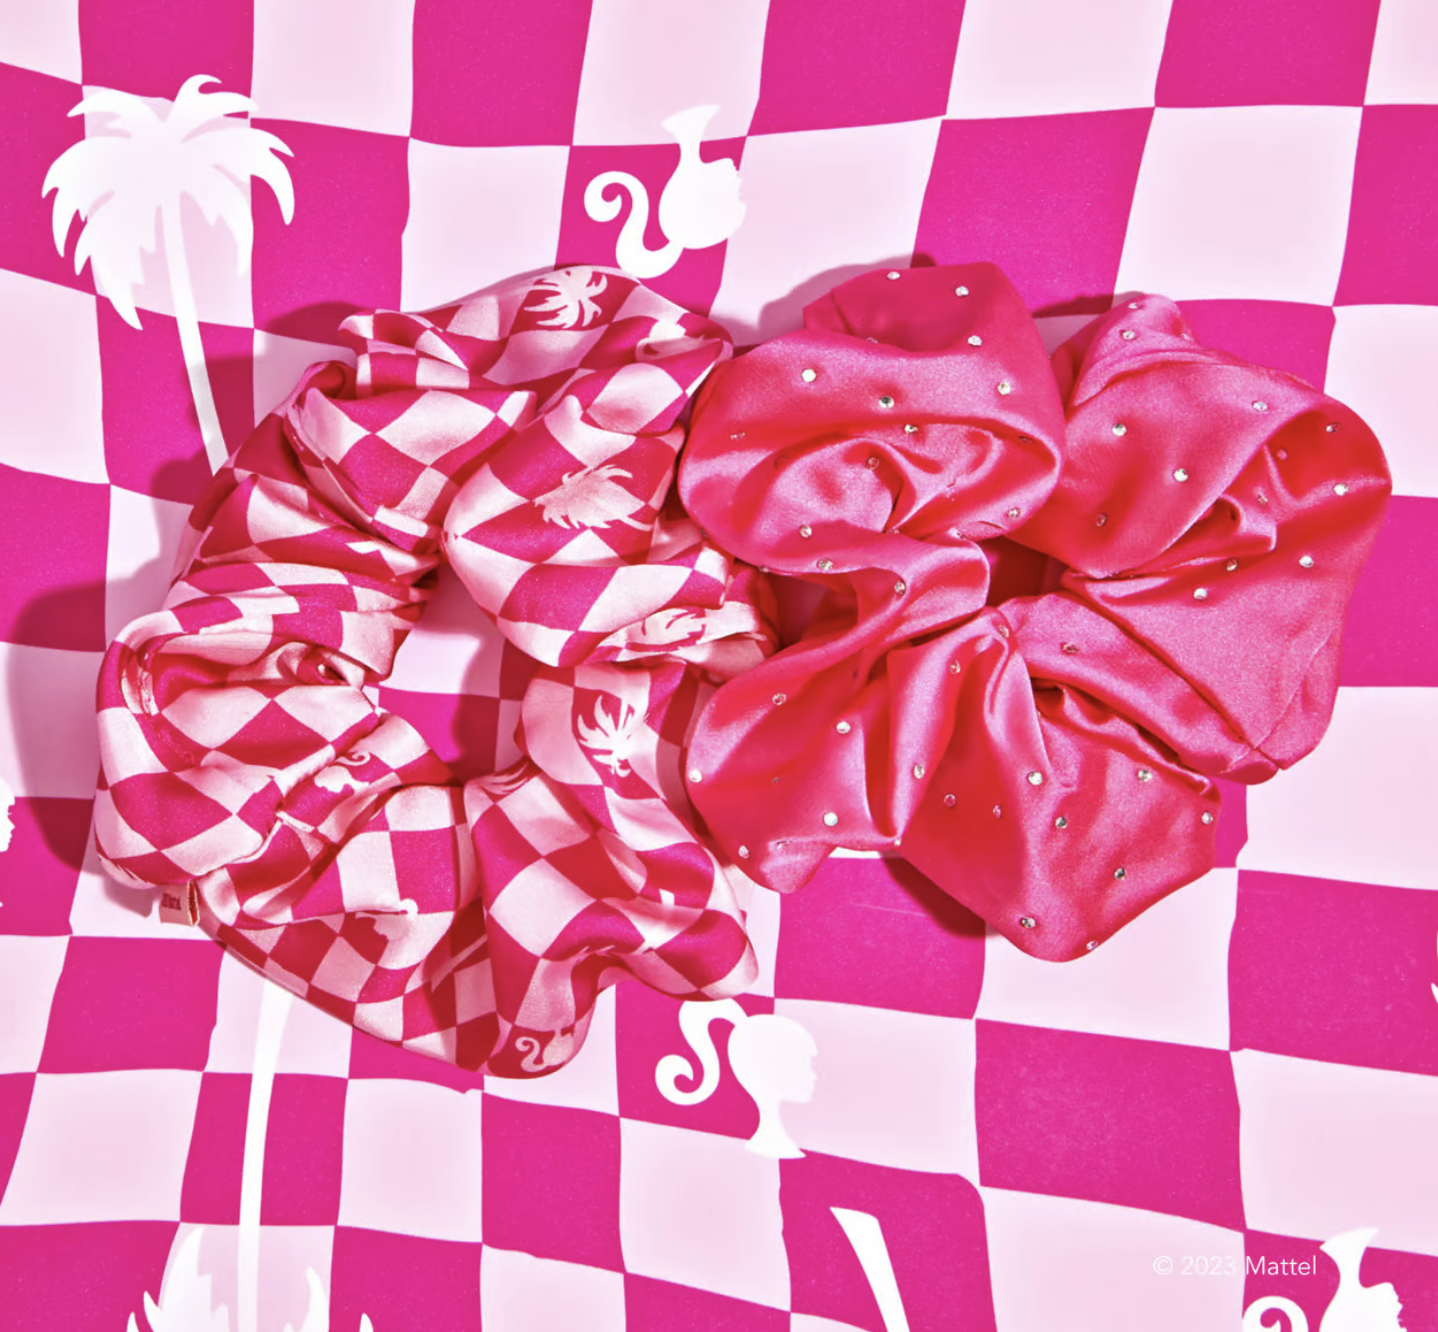 Hot Pink Barbie Satin Scrunchie 2 PACK Barbie™ x KITSCH